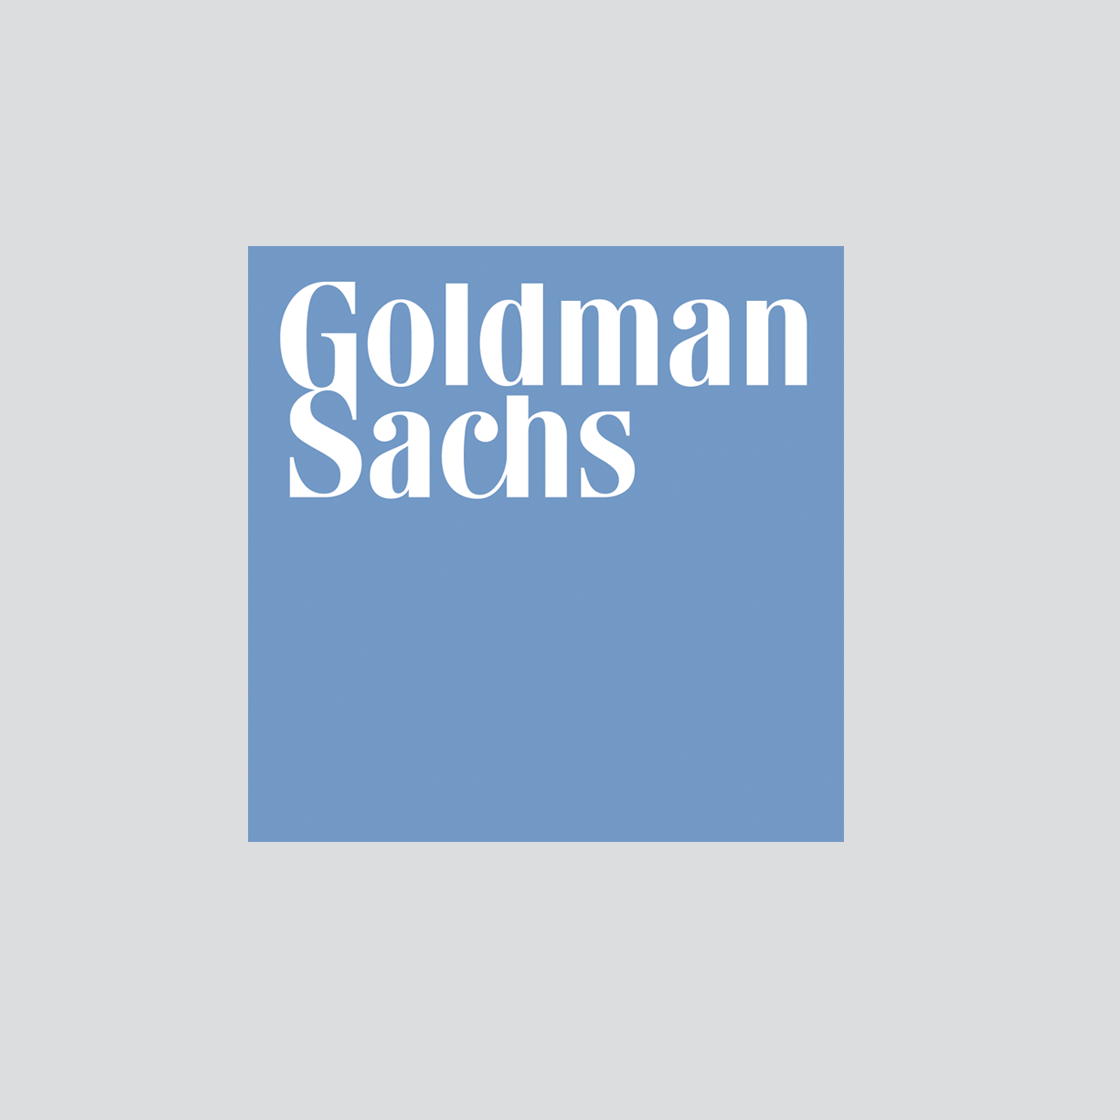 Goldman Sachs Logo - Goldman sachs vector Logos